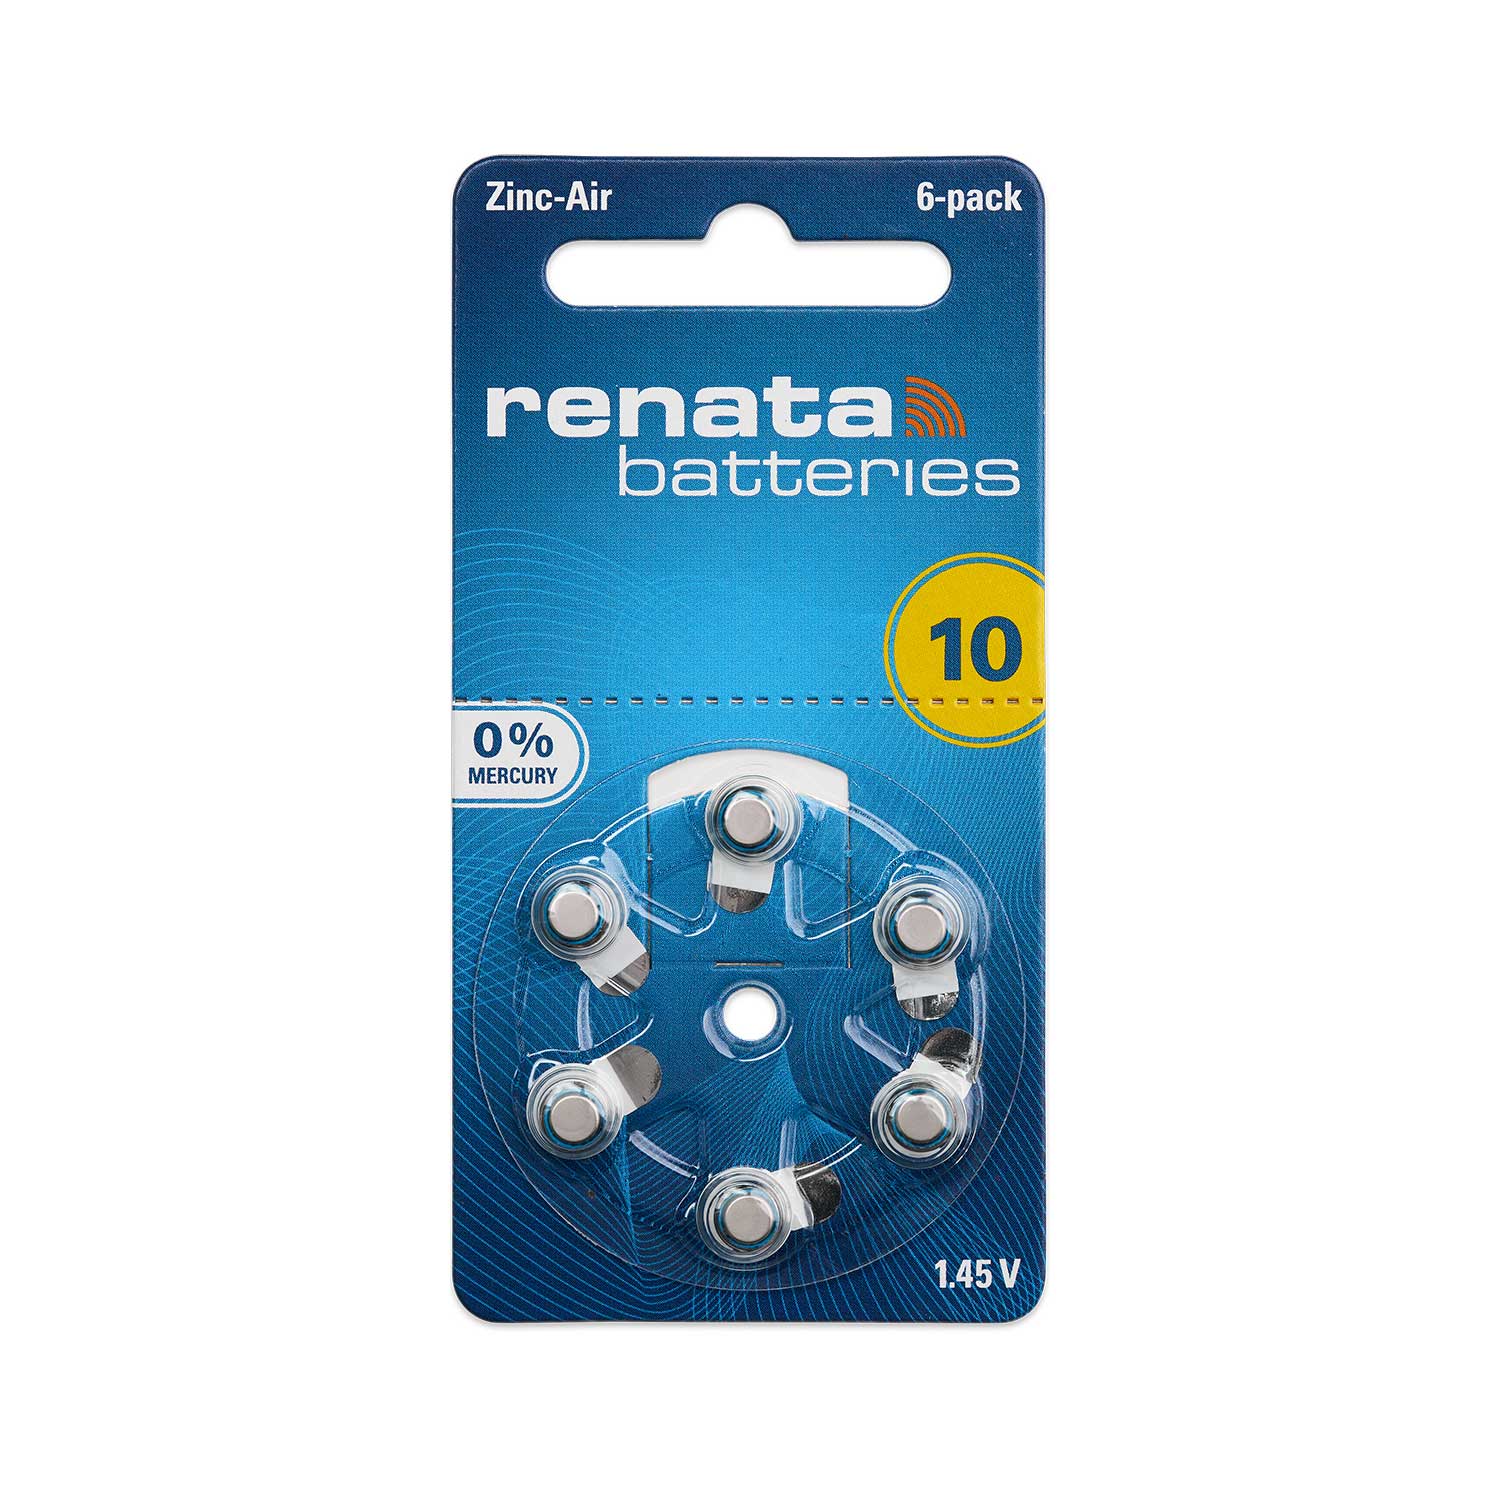 Renata 10 hearing aid button cell <br/>Brand: Renata / Manufacturer name: 10